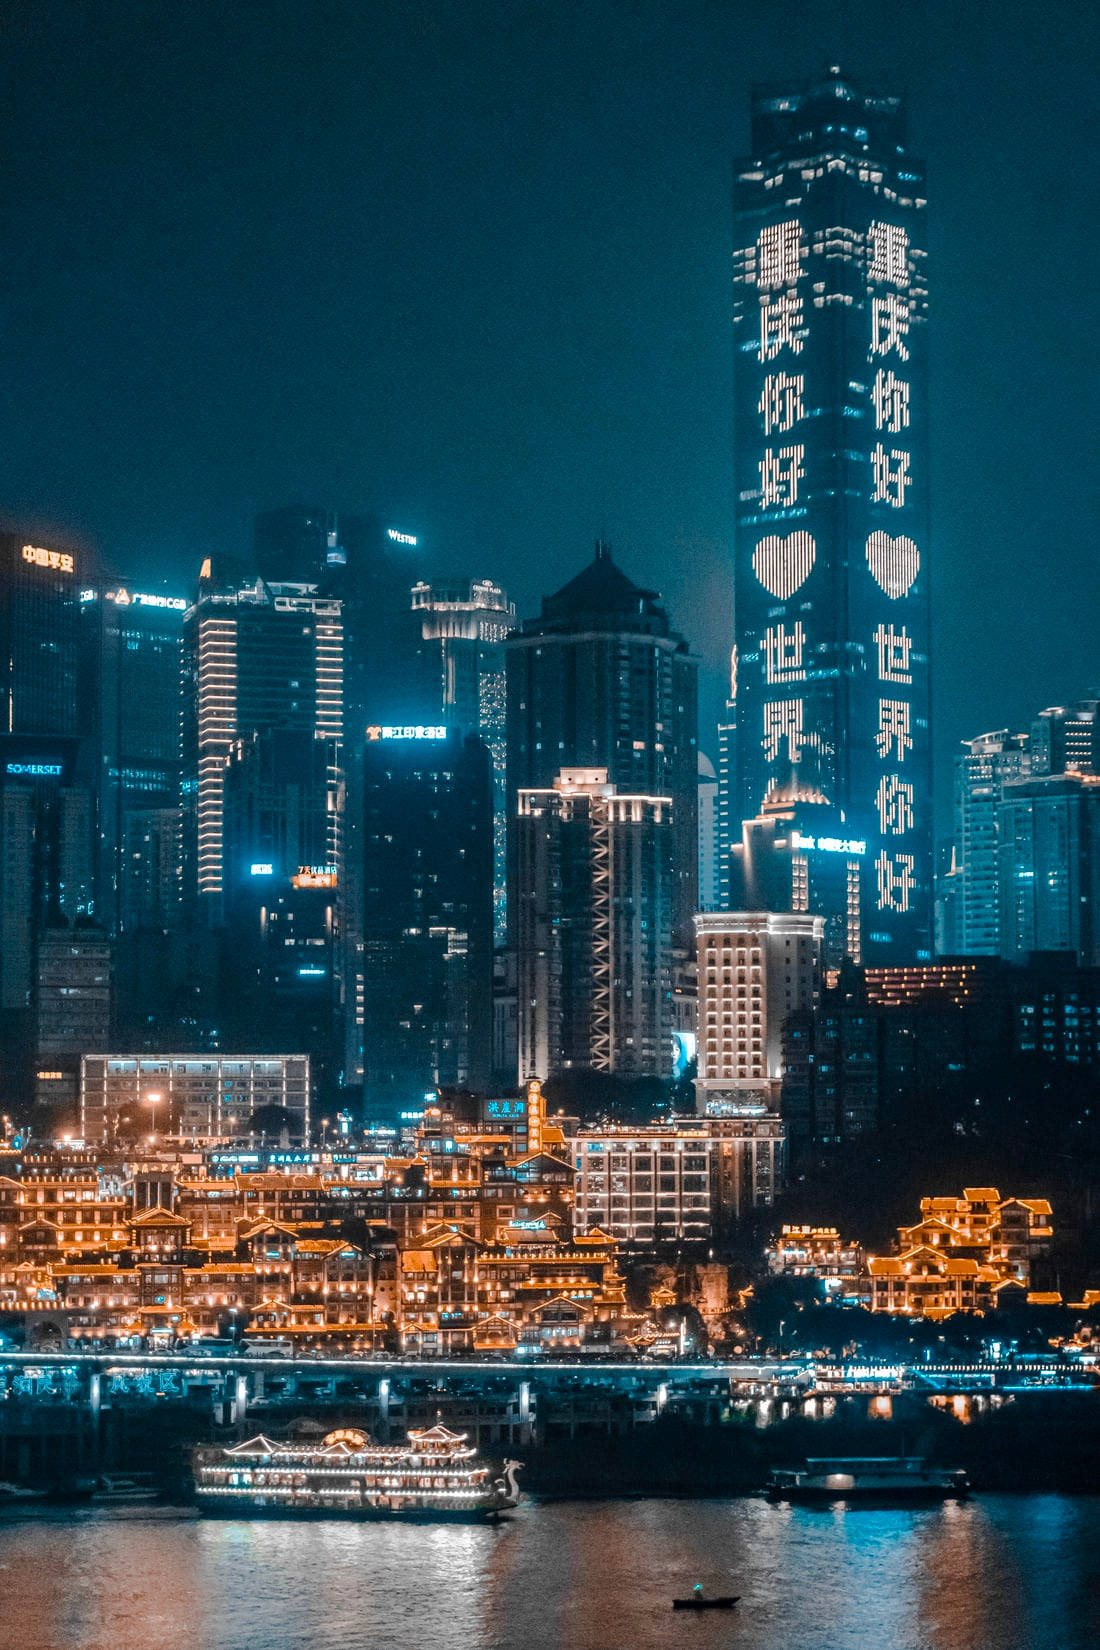 Chinatowncity Lights: Kinesiska Kvarterets Stadsbelysning (as A Possible Wallpaper Title) Wallpaper